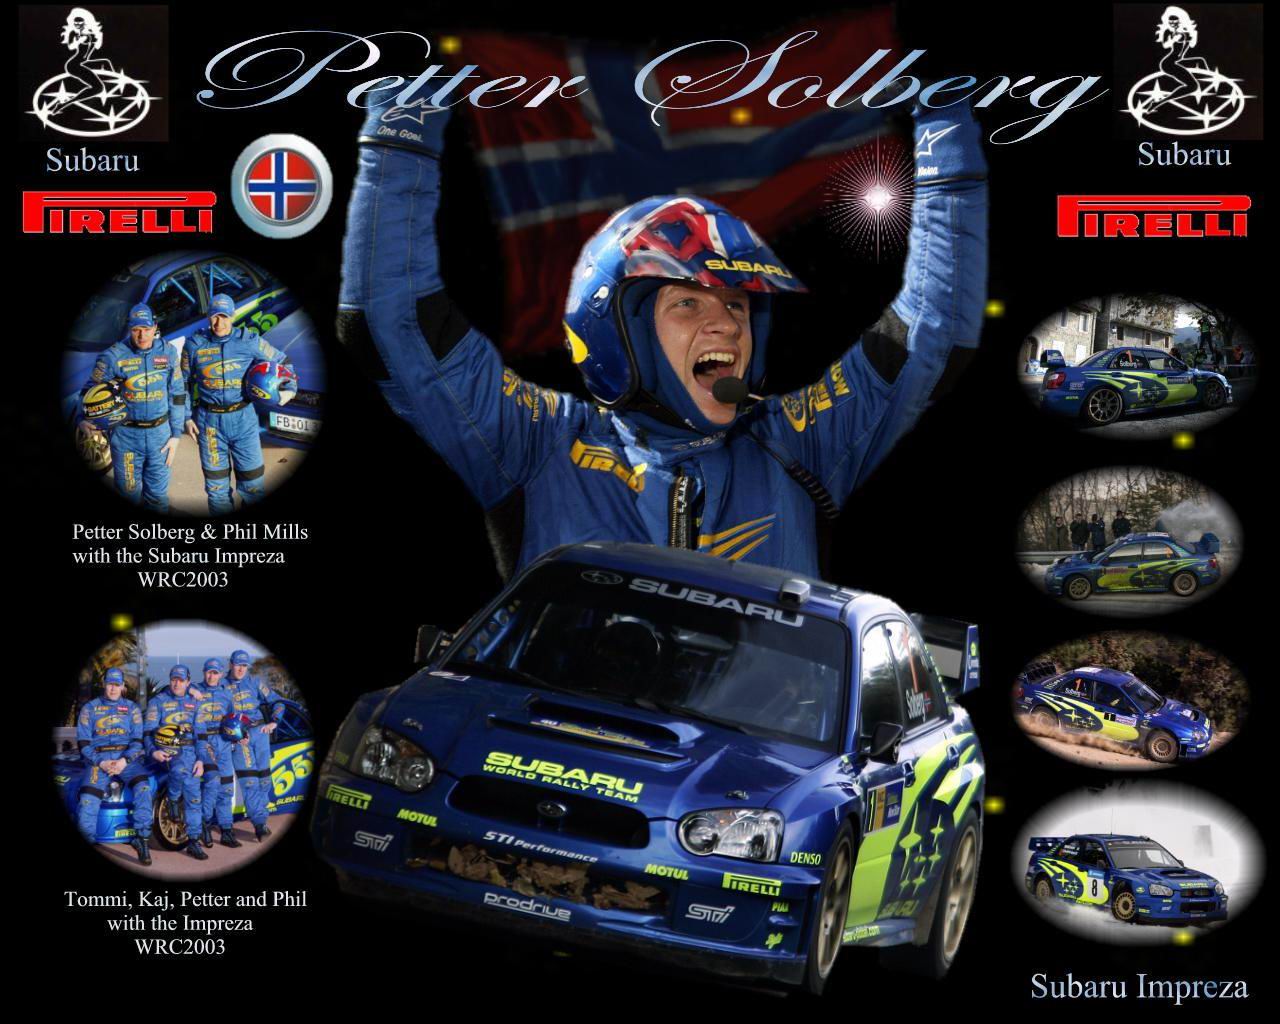 World Champion Petter Solberg 壁紙 ファンポップ